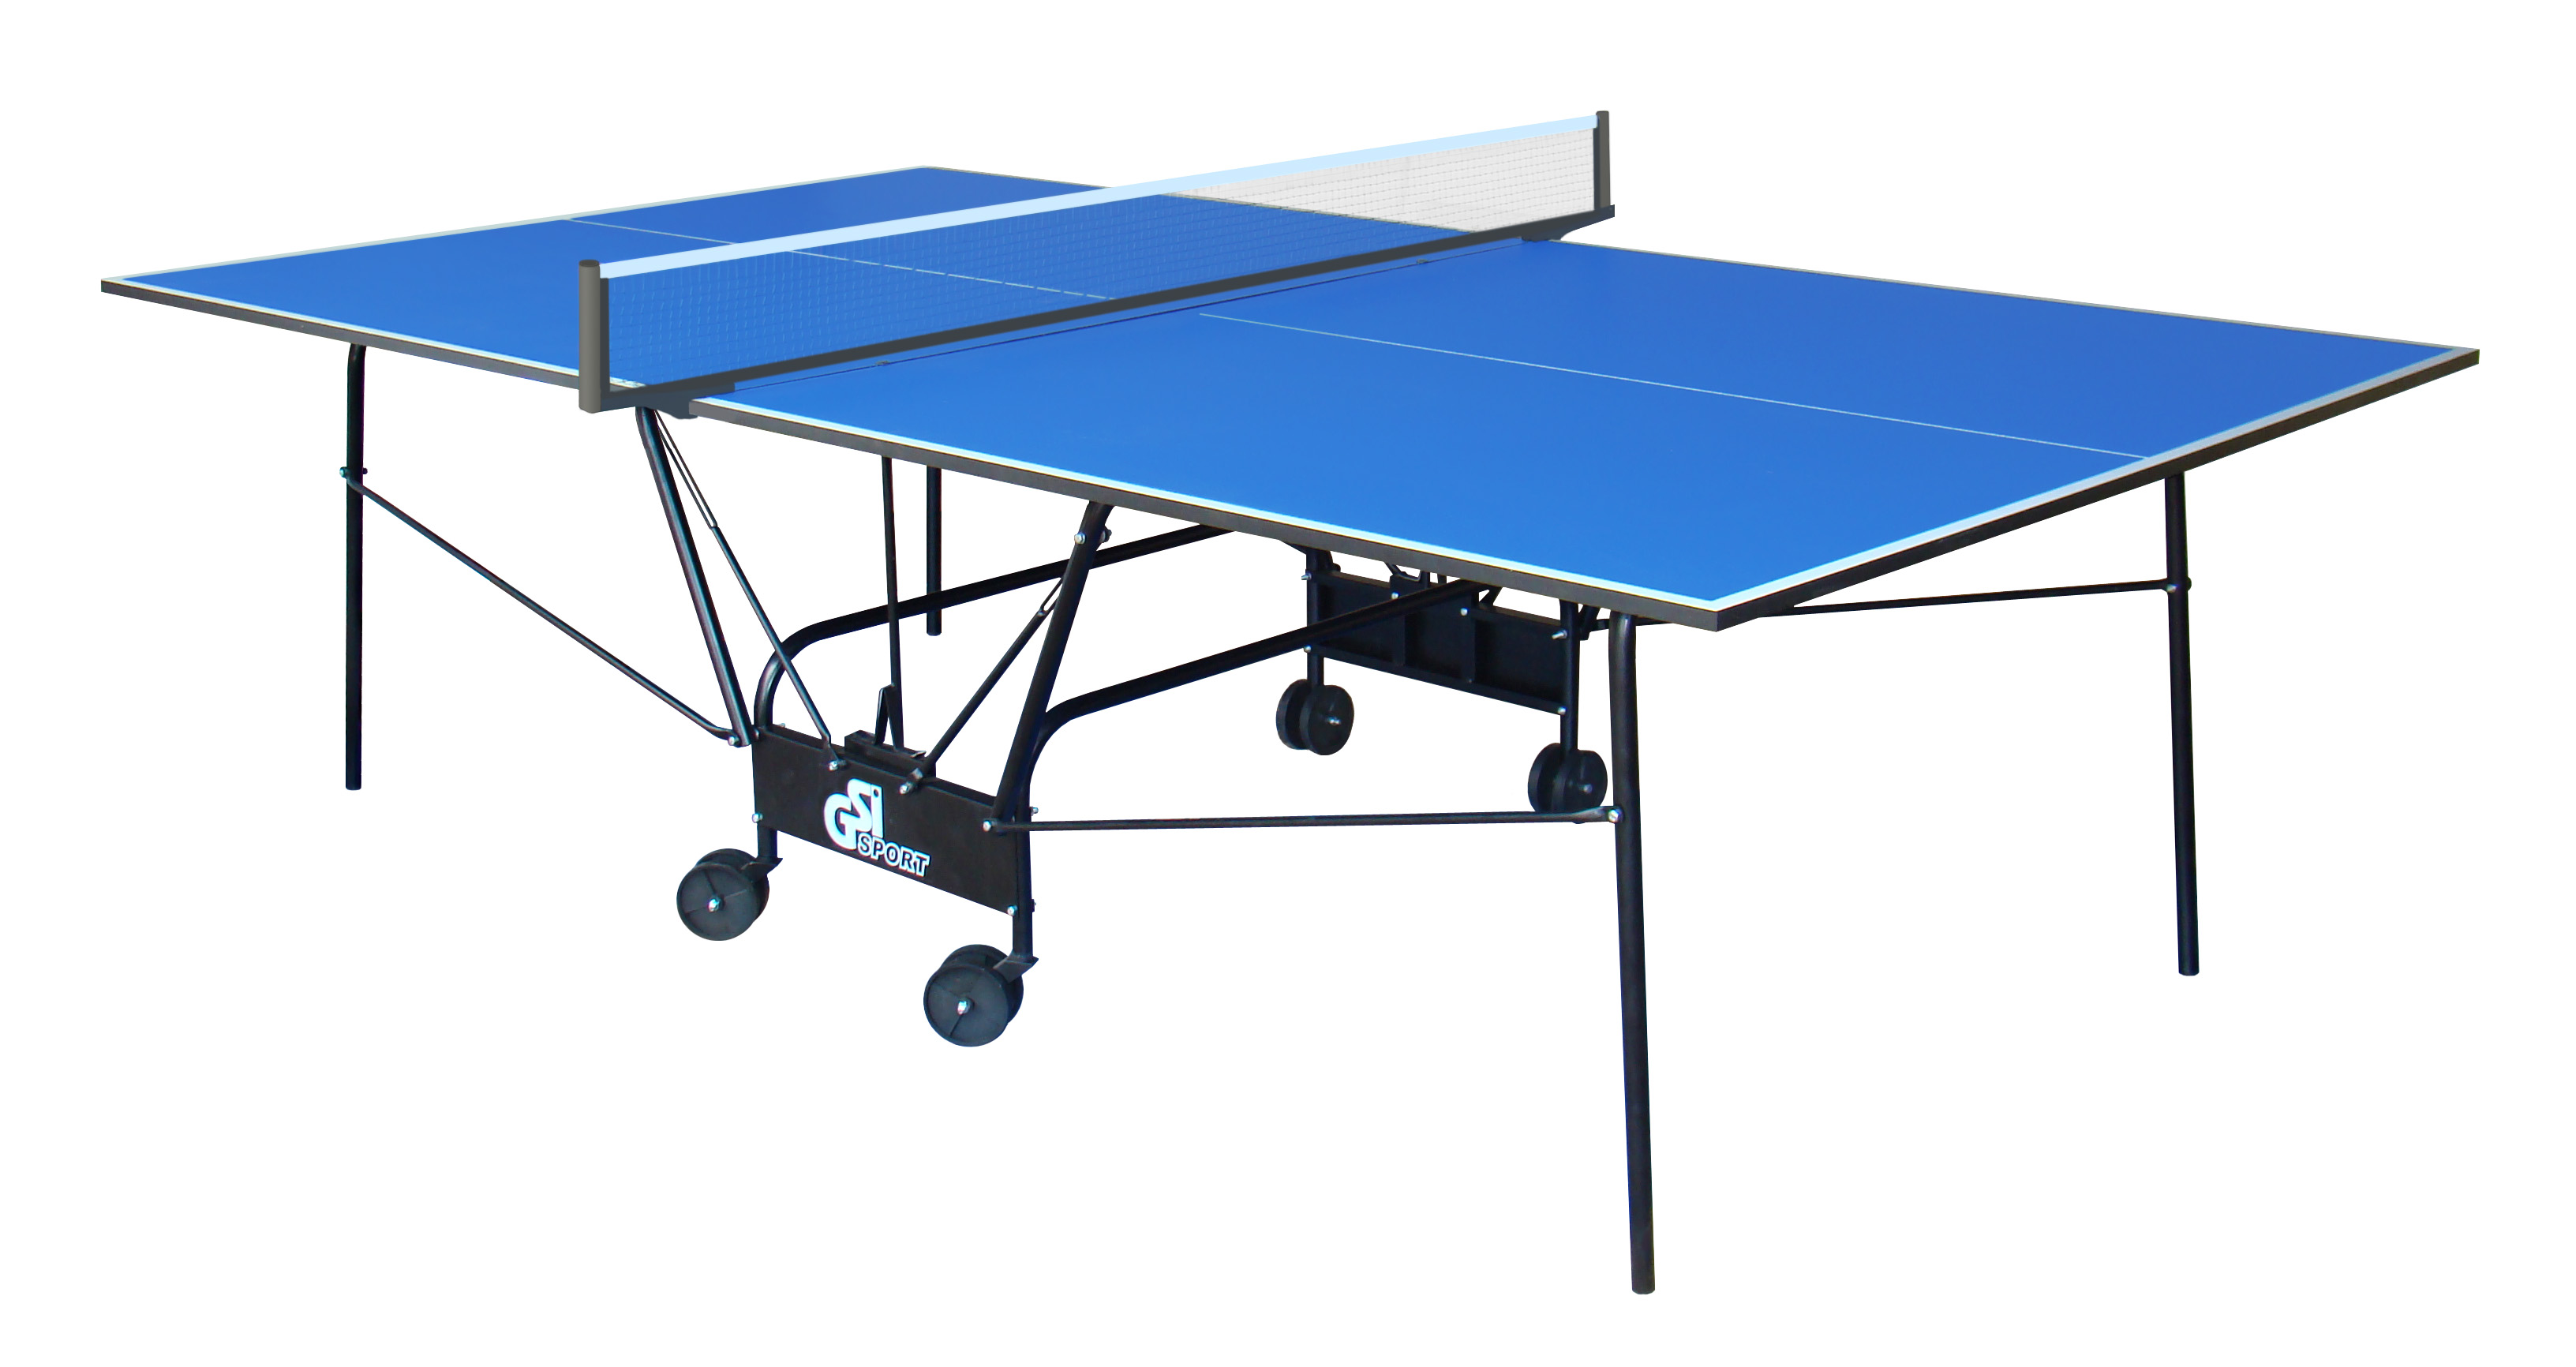 теннисный стол start line compact expert indoor